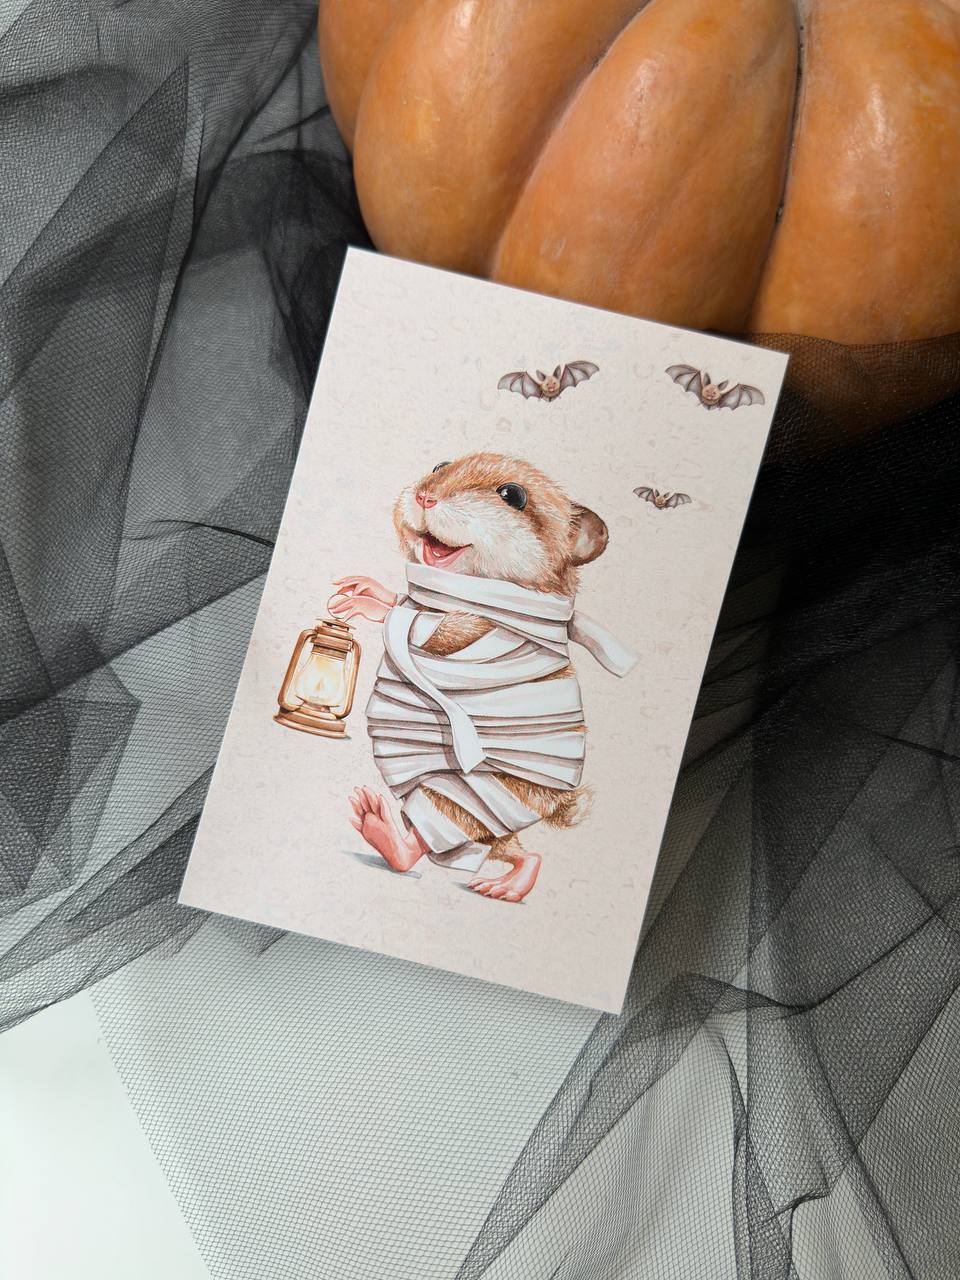 Kids halloween cards